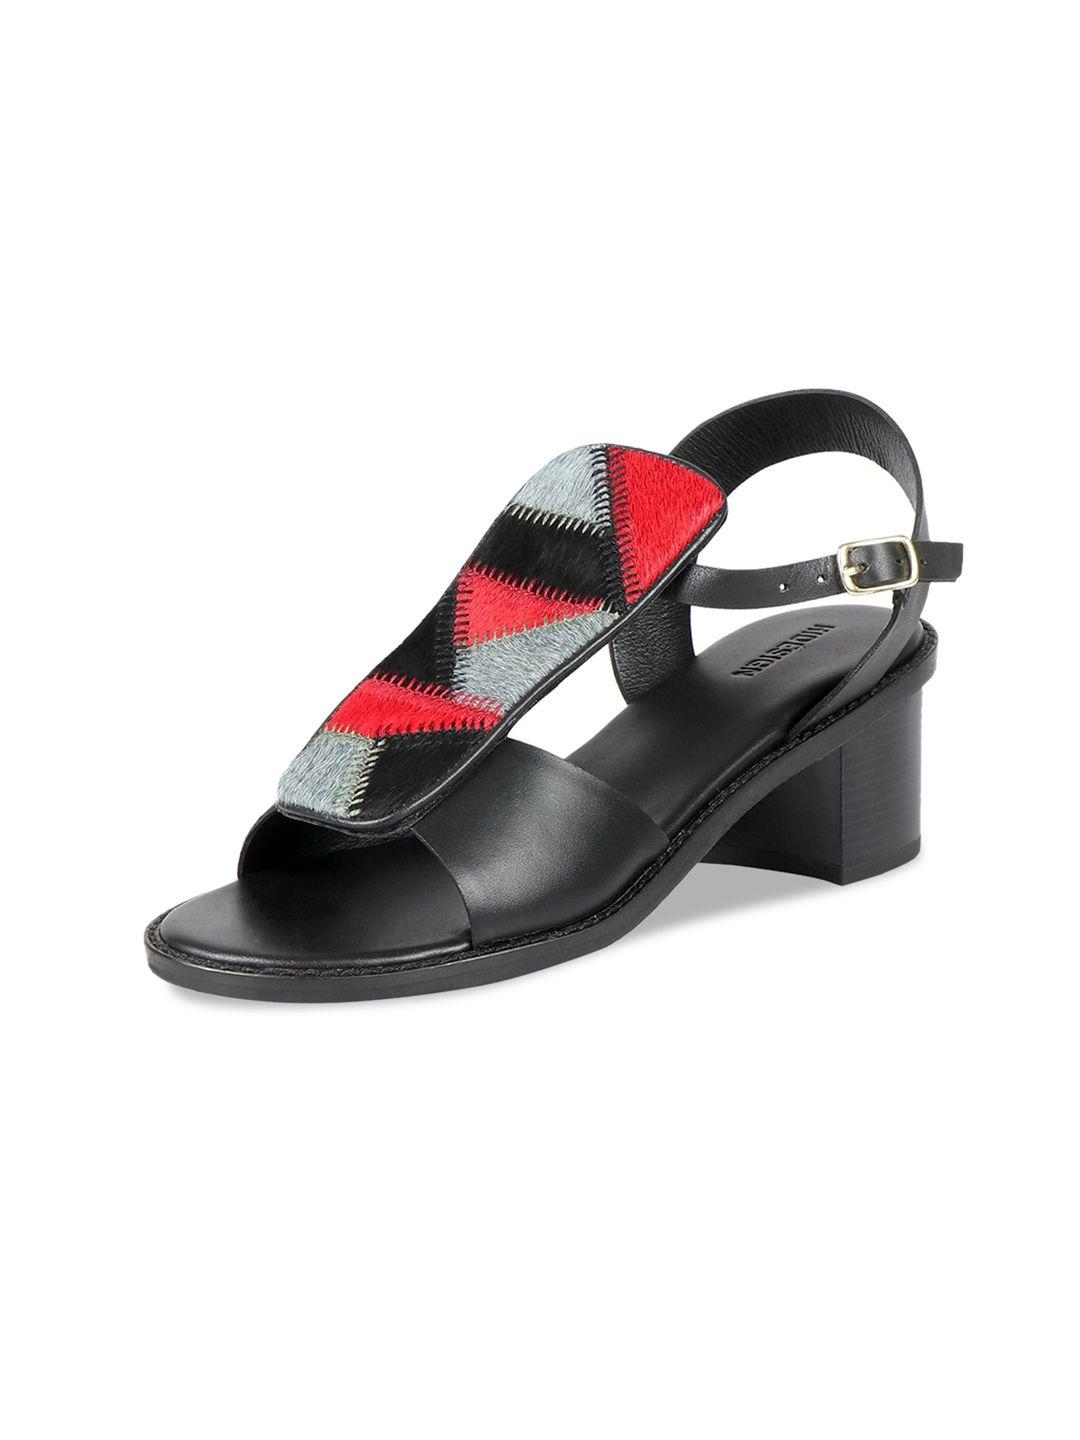 hidesign-joni-colourblocked-leather-block-heels